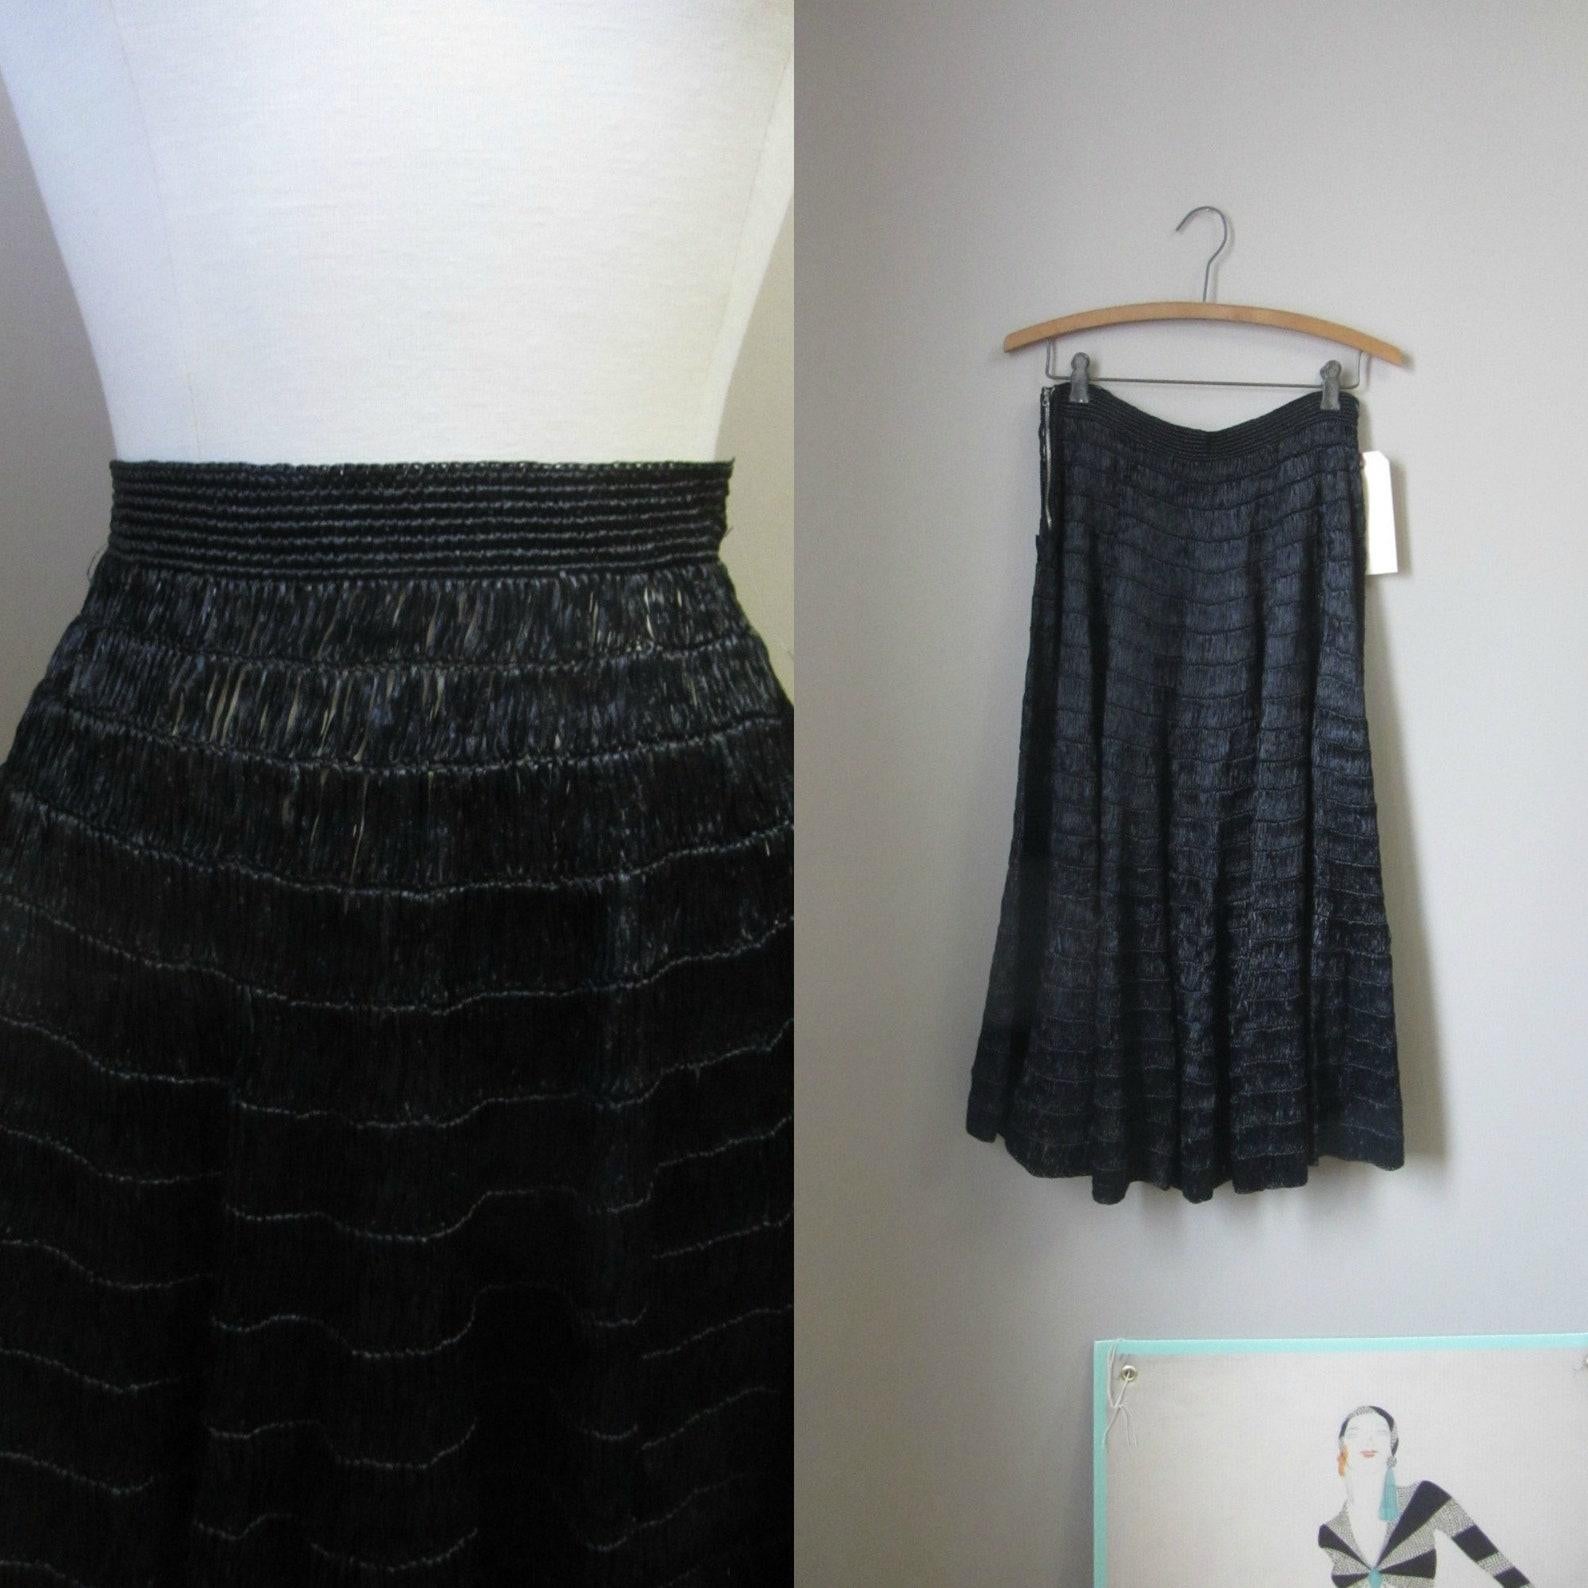 Vintage black raffia skirt. fitted waist. full skirt. handwoven. side metal zip closure.

Circa 1950s
No Label
Material - Raffia
Black
Excellent Condition

✂----M e a s u r e m e n t s: all in inches.

⦿ Waist: 24